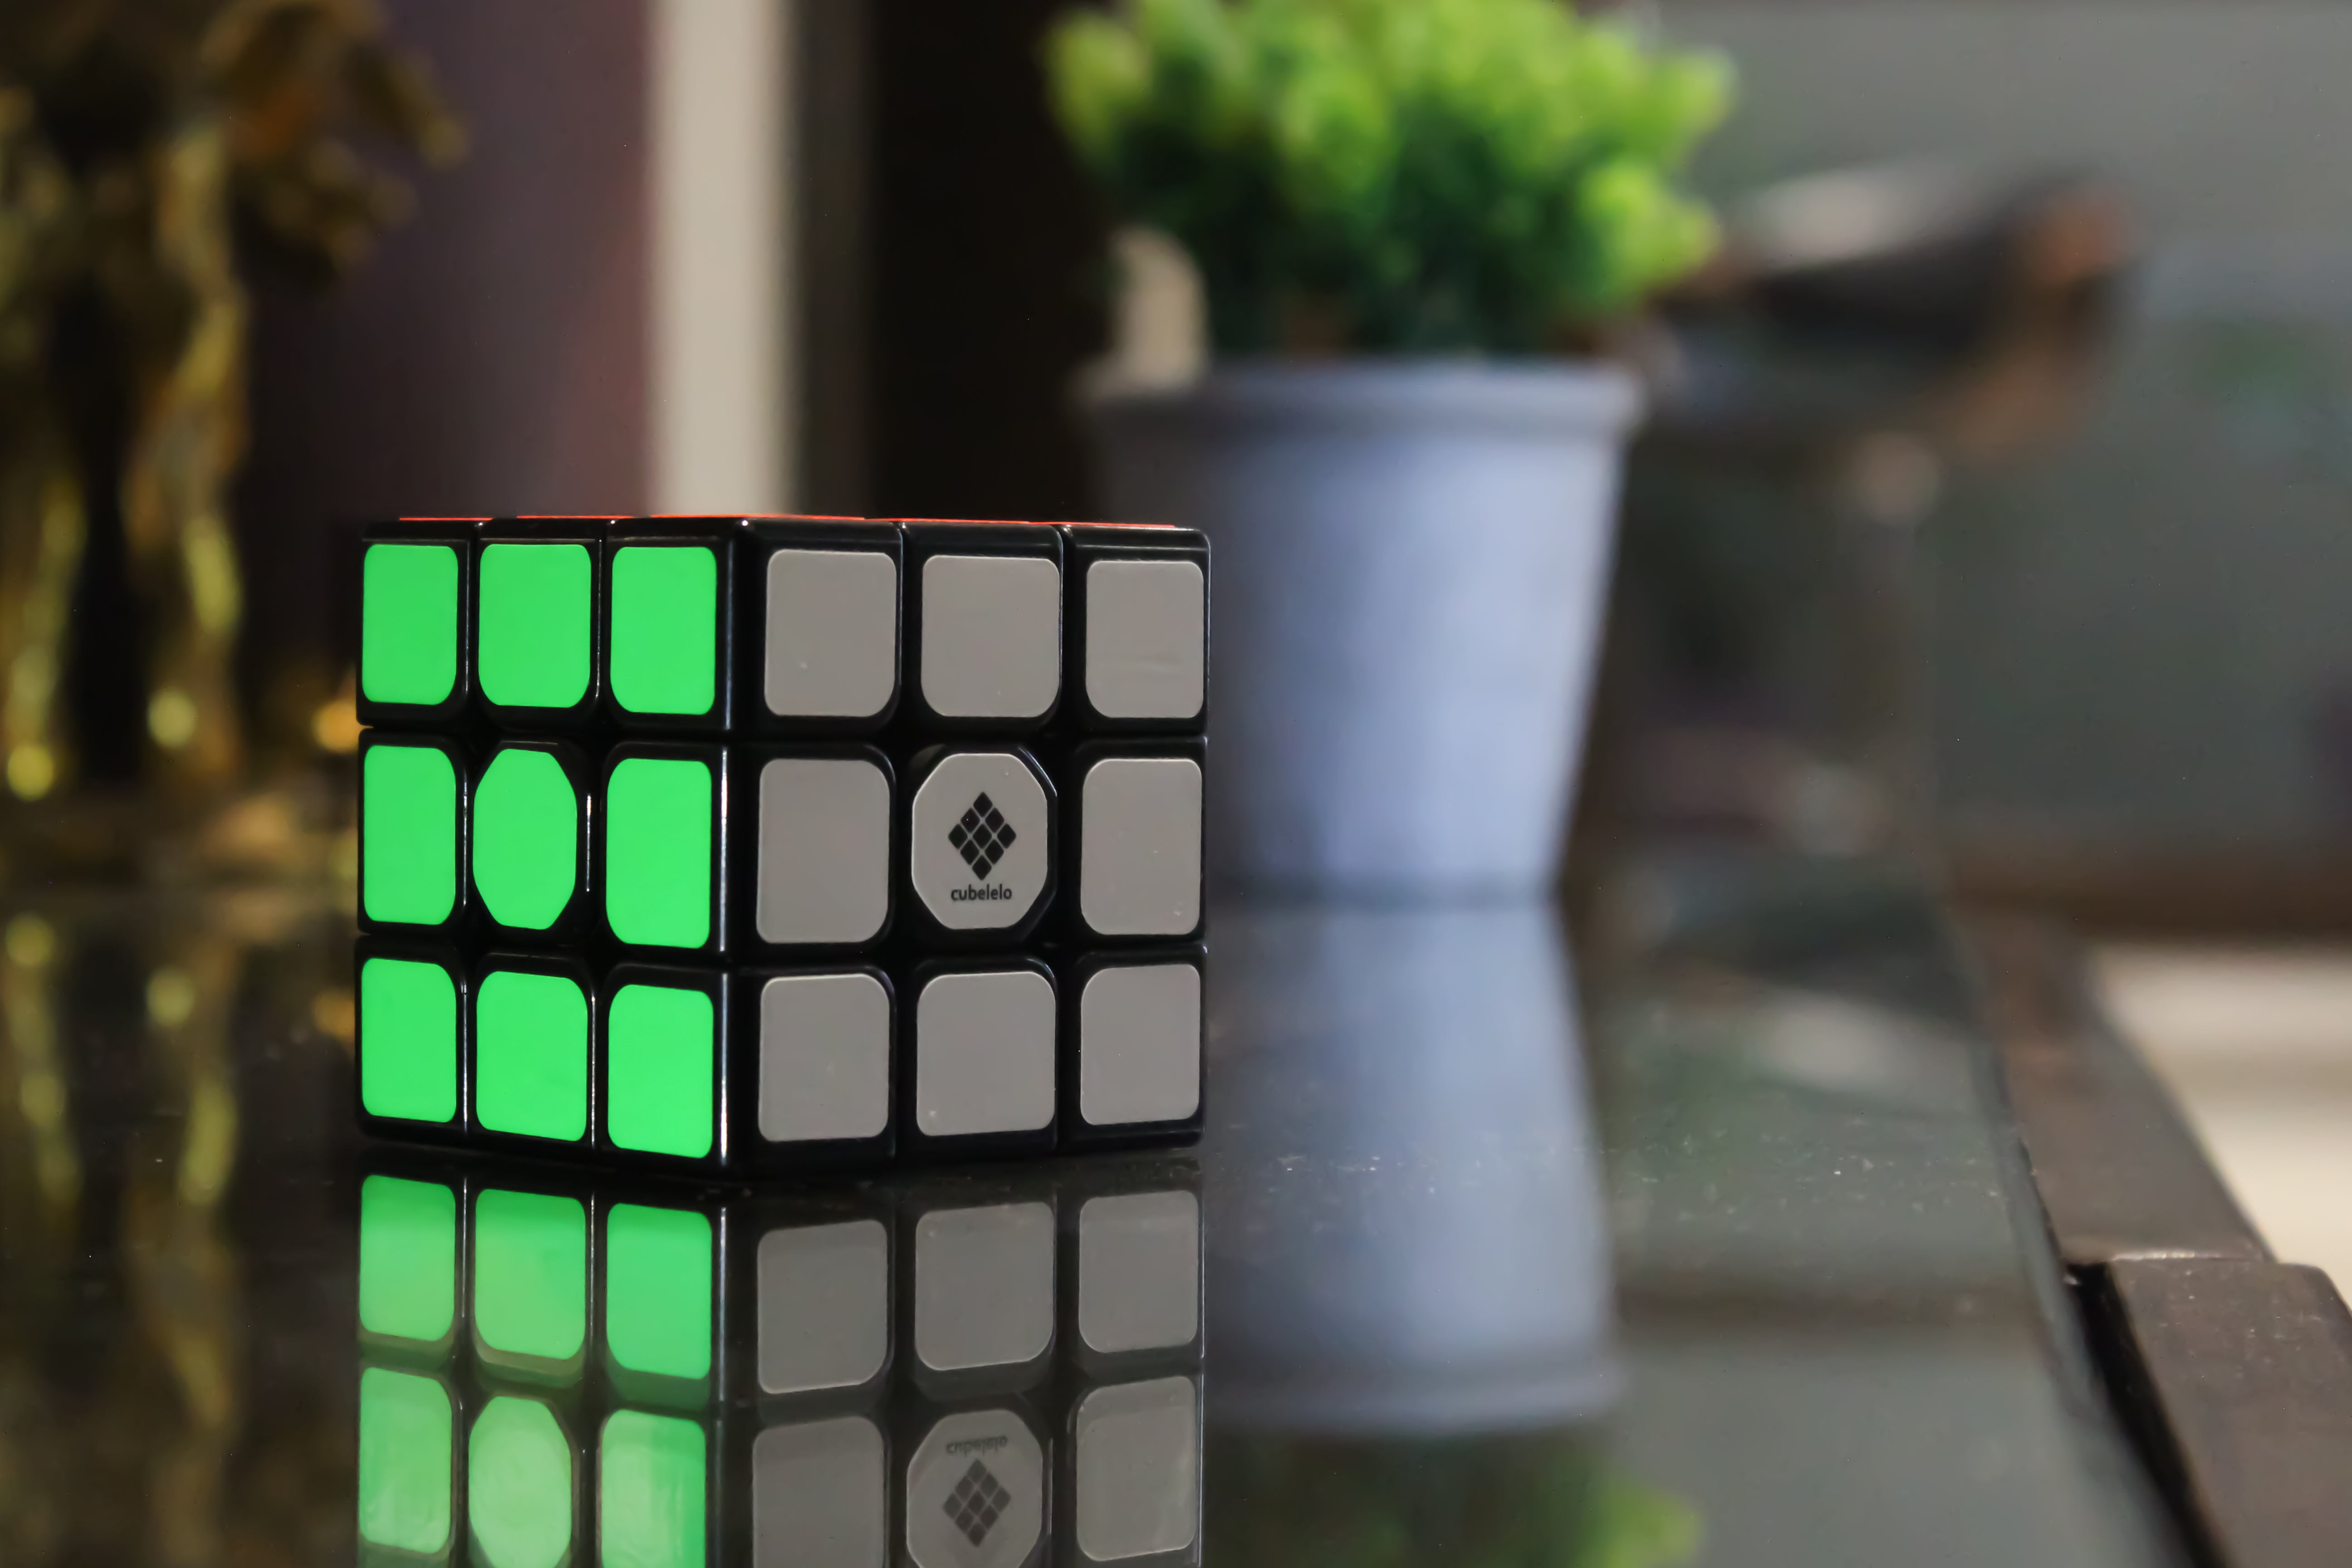 Cubo Magico 3x3 Faster Action Stickerless Original Rubik's